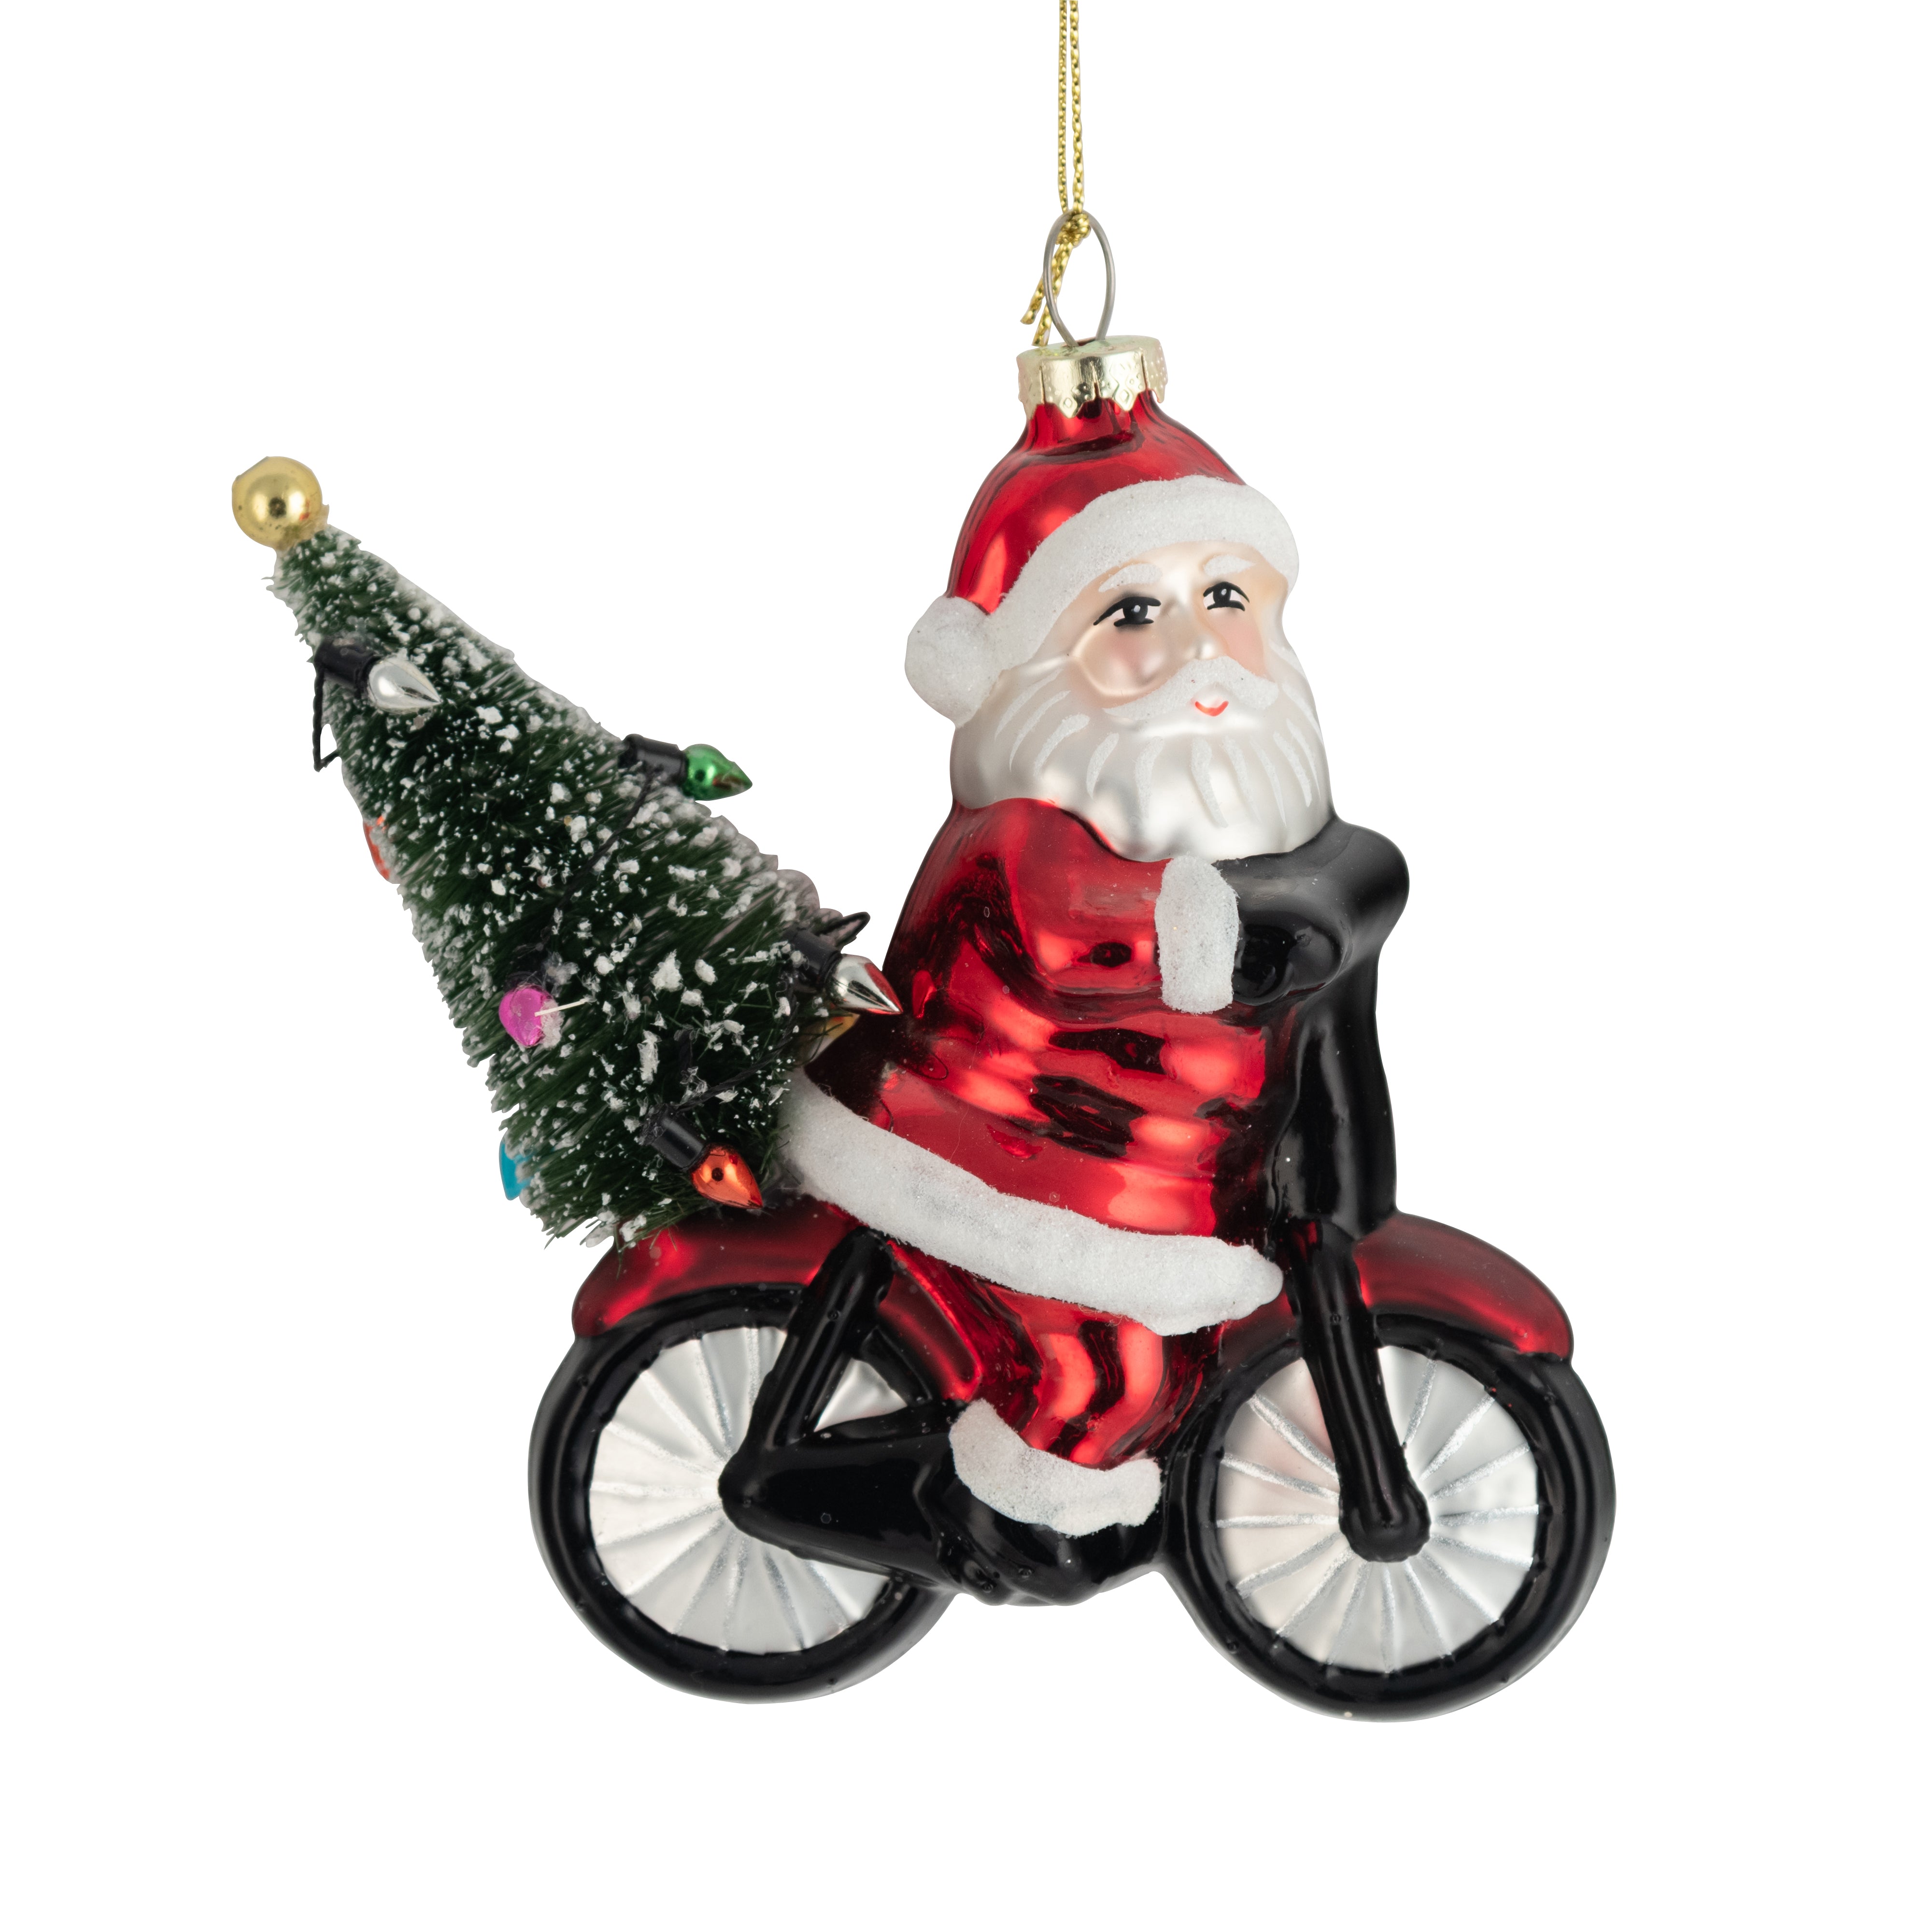 Glass Santa on a bike ornament